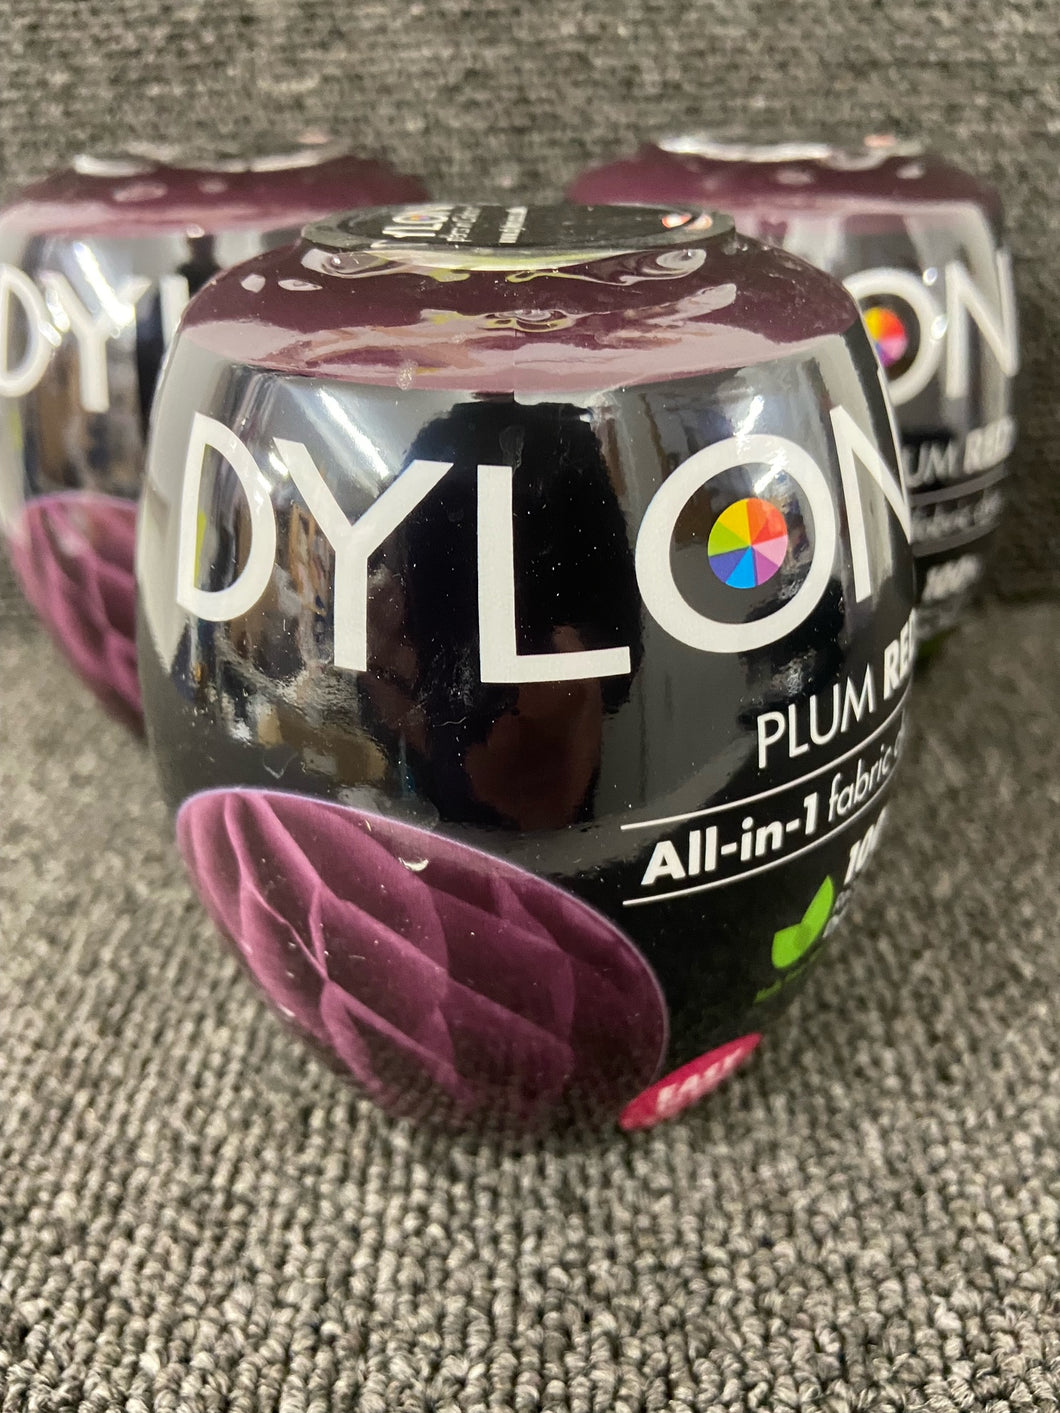 Dylon Machine Dye All-in-1 Pod